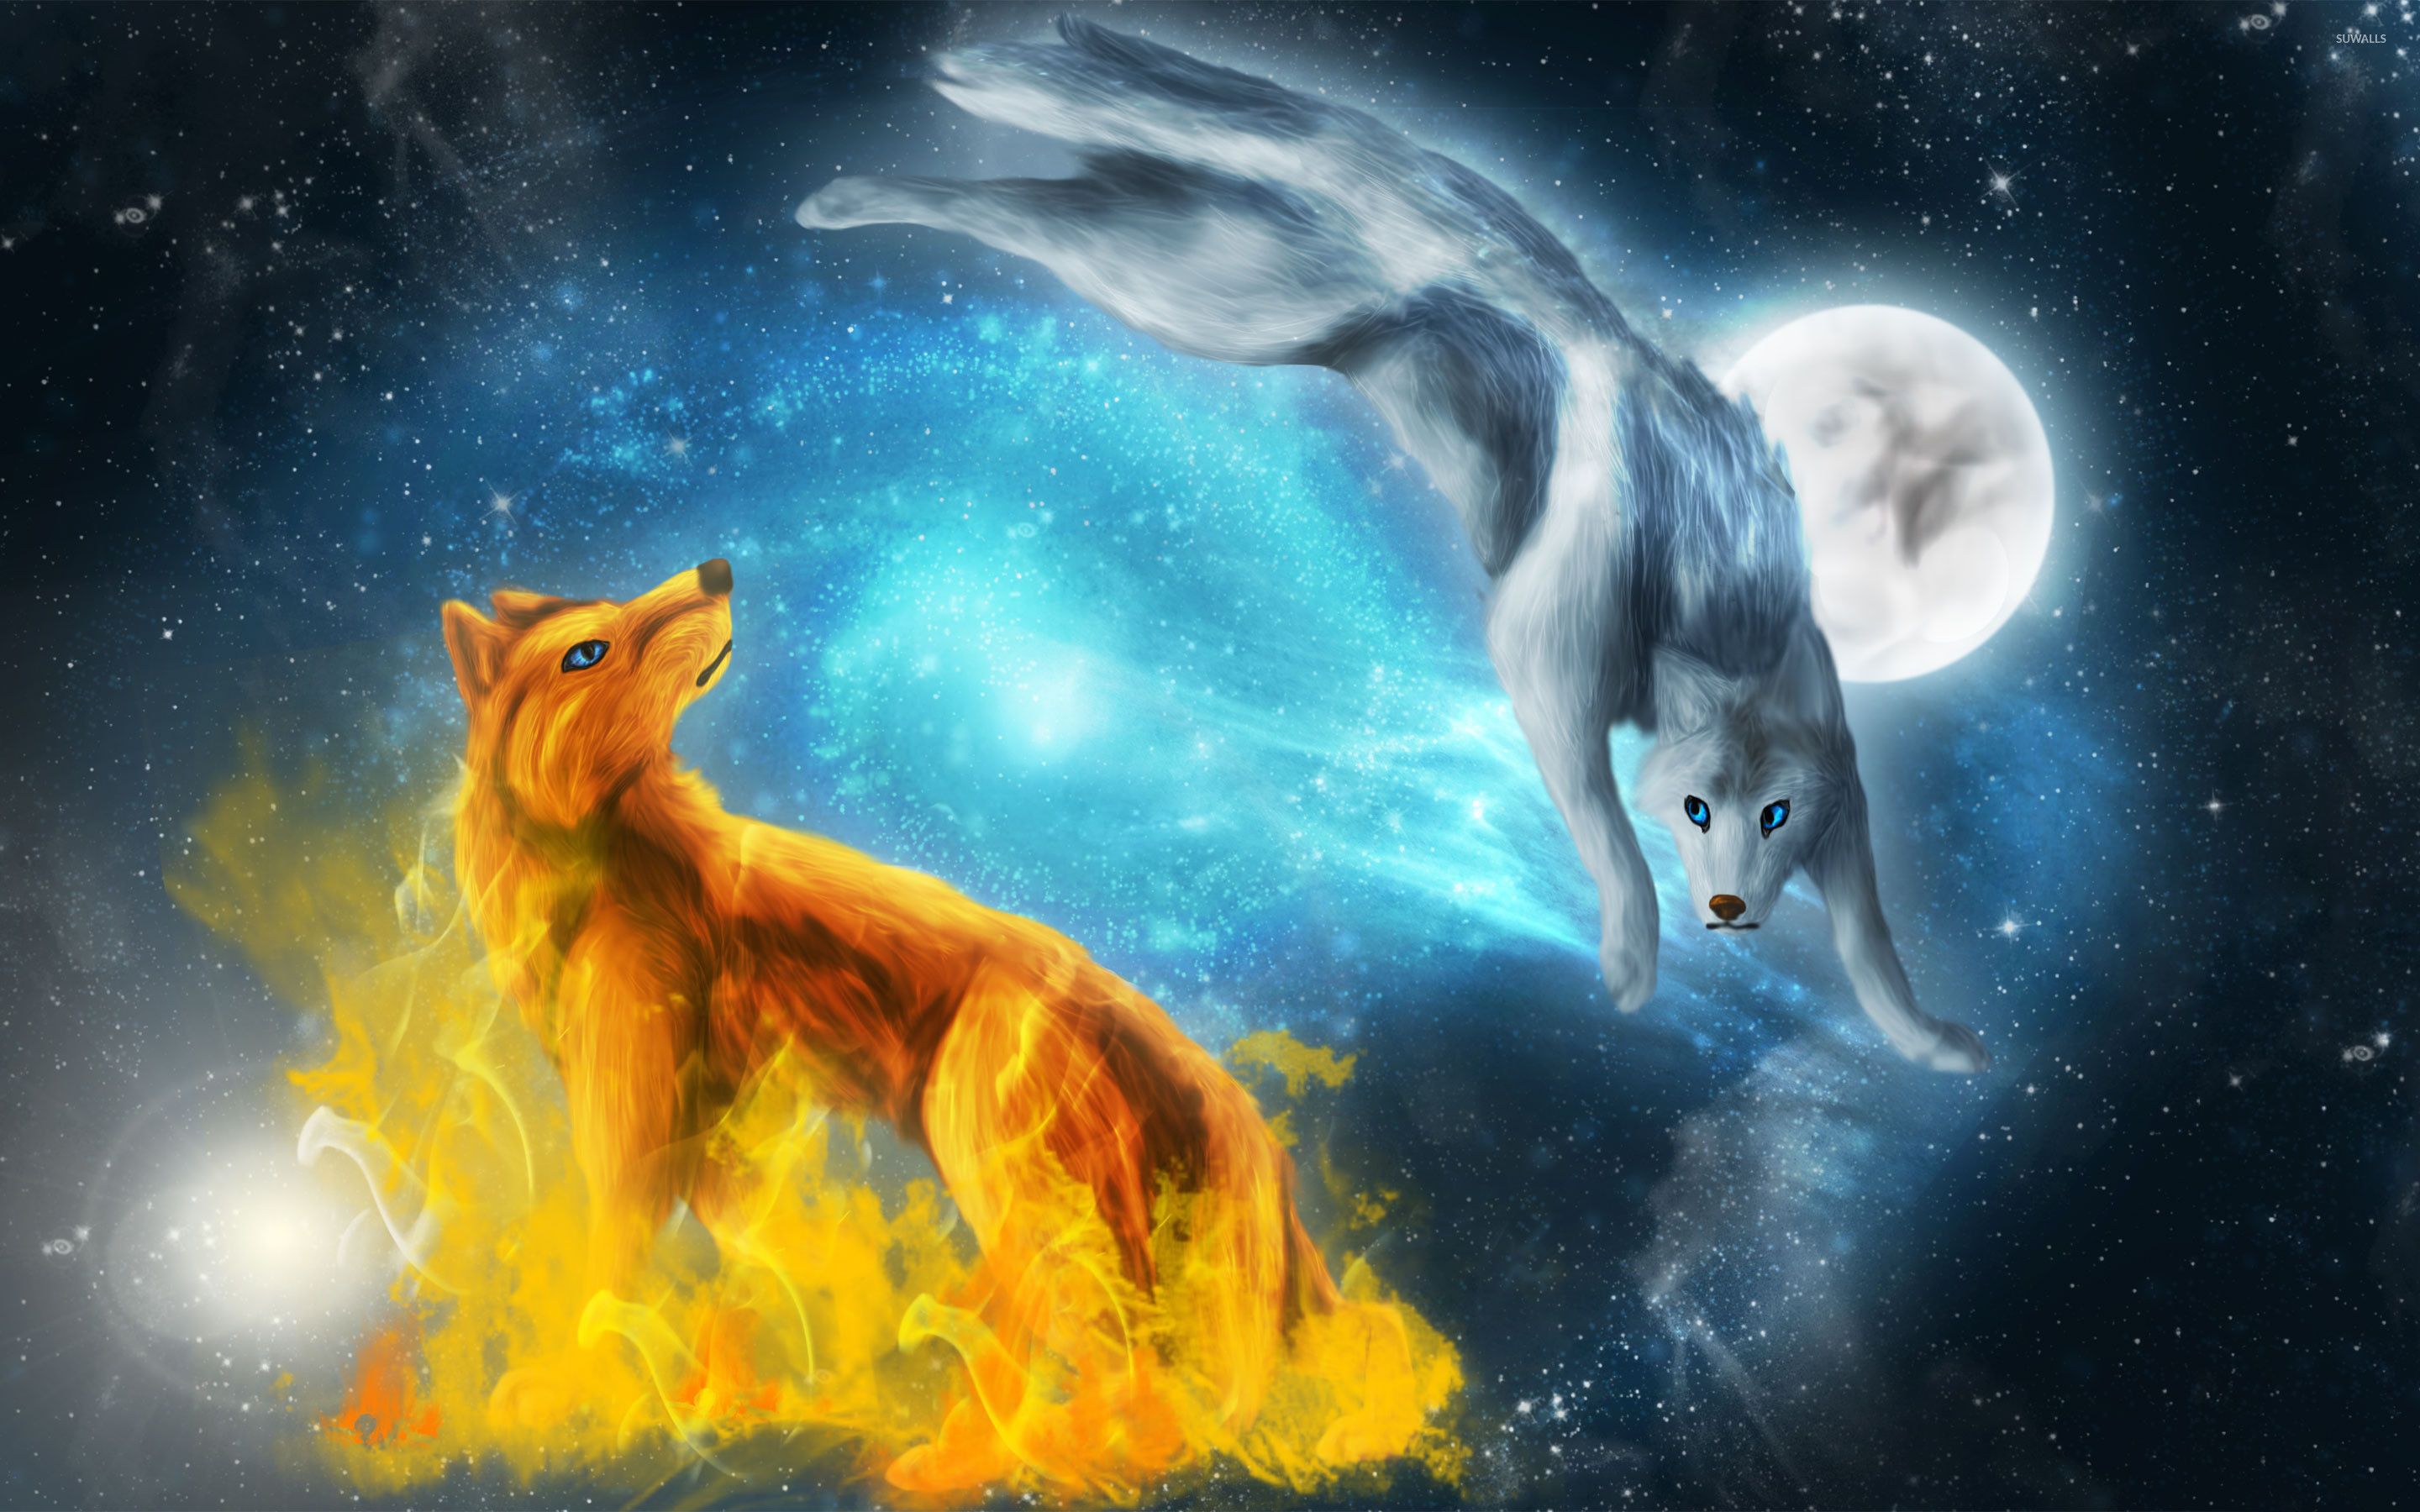 Spirit wolf wallpaper by VengenceWolf  Download on ZEDGE  7ddc